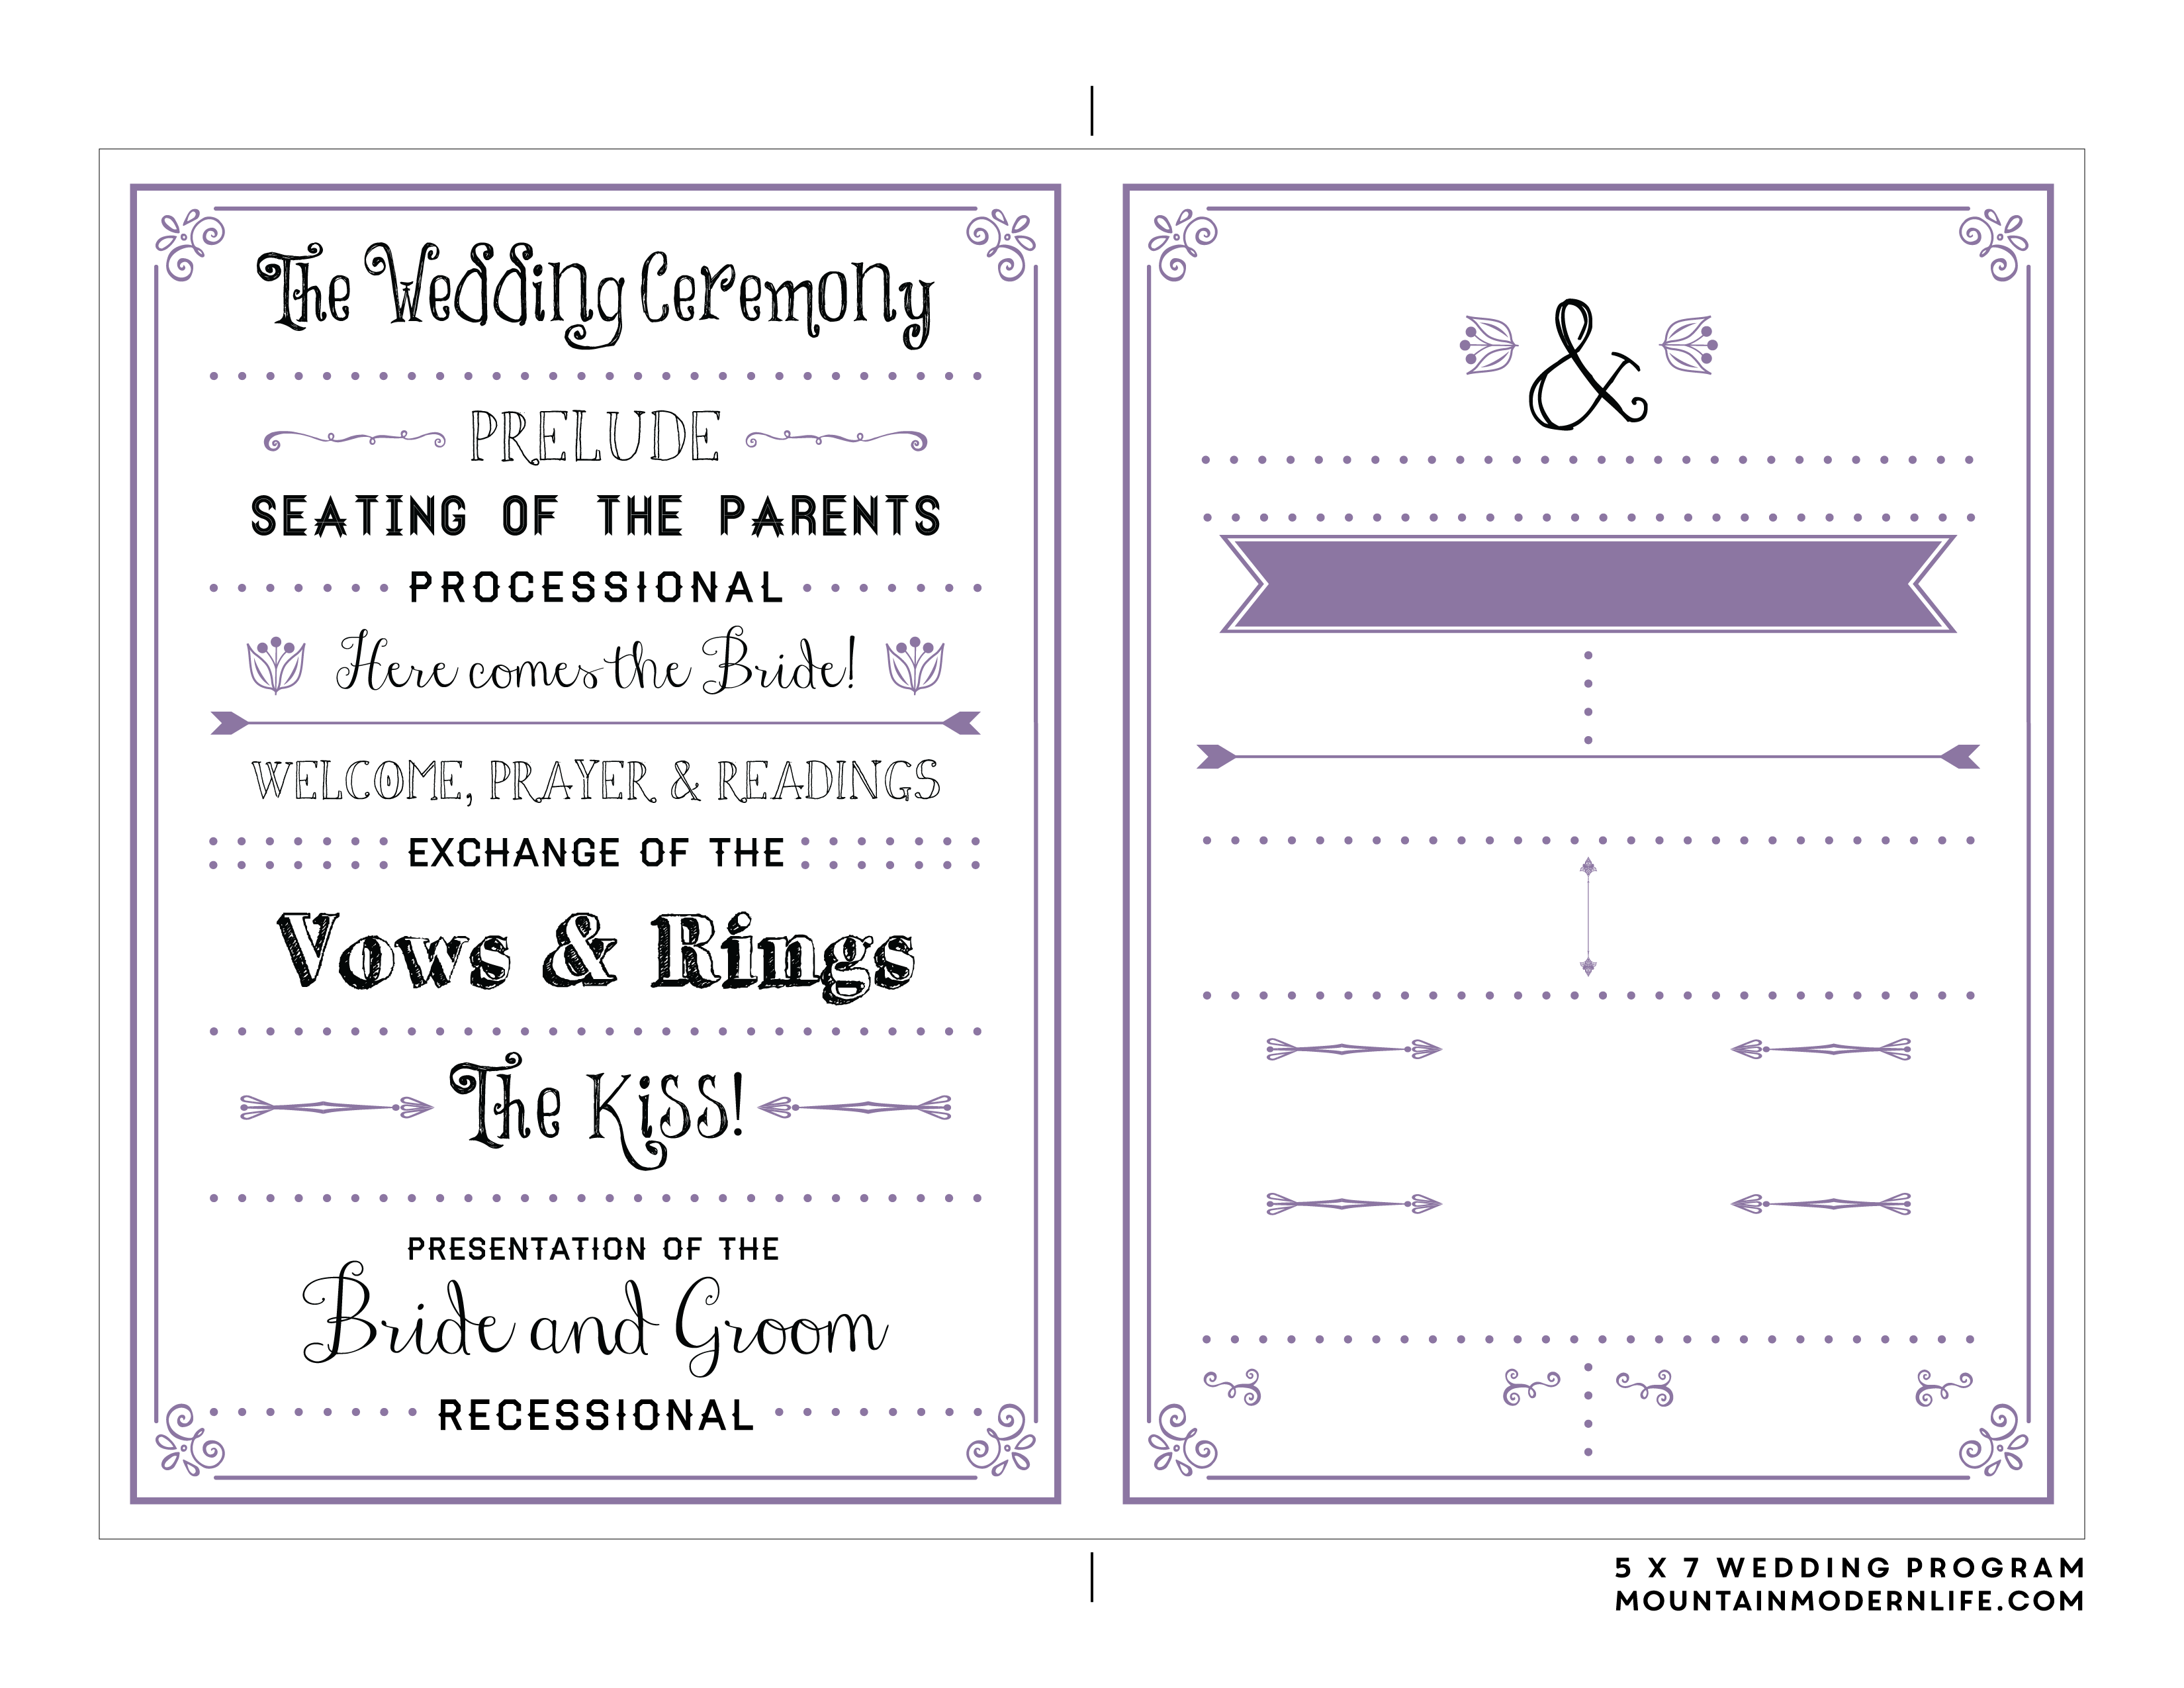 FREE Printable Wedding Program | MountainModernLife.com